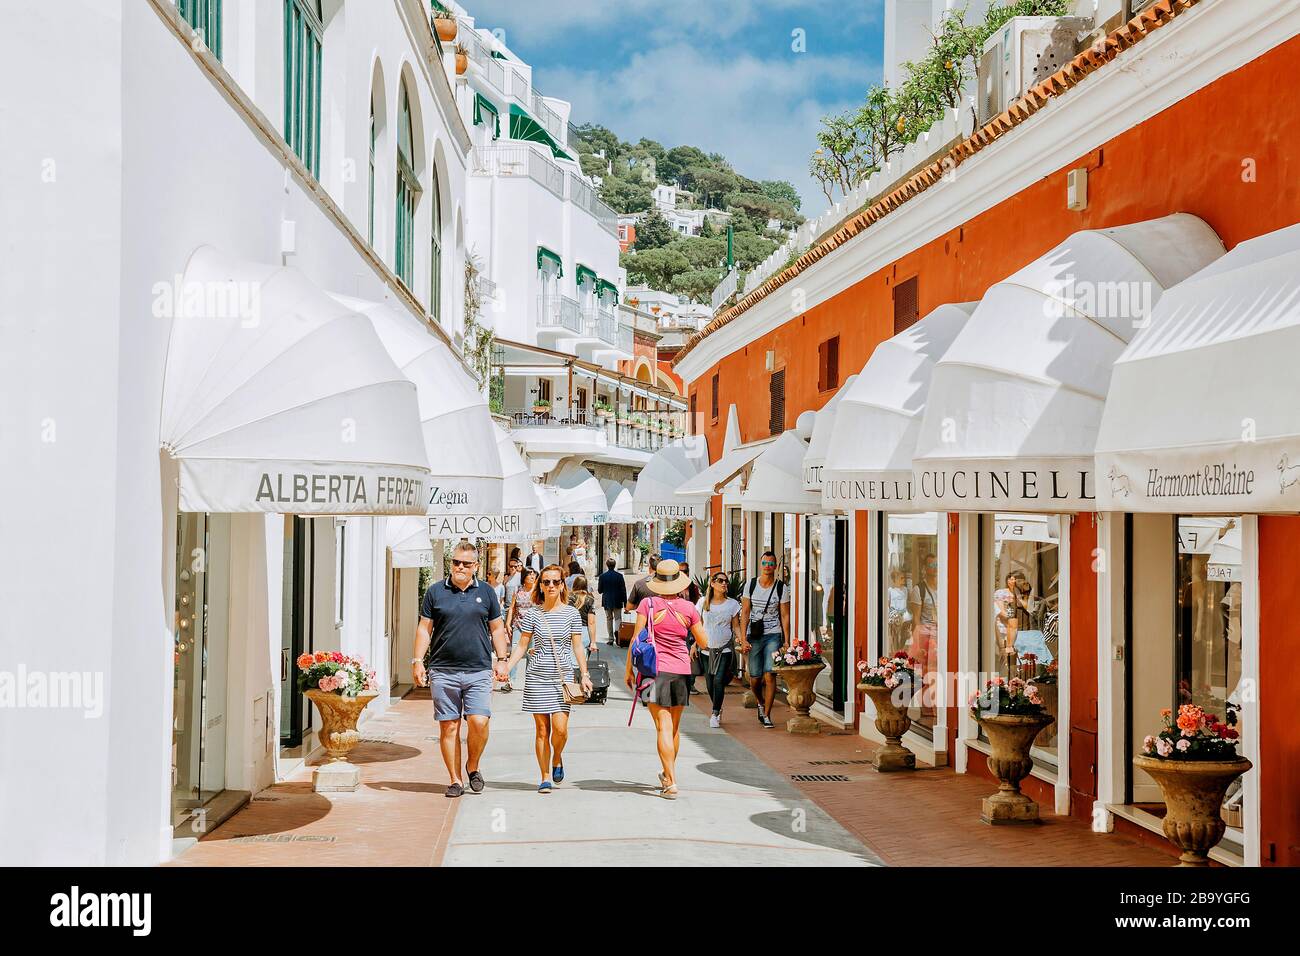 https://c8.alamy.com/comp/2B9YGFG/capri-fashion-shop-capri-island-campania-italy-europe-2B9YGFG.jpg